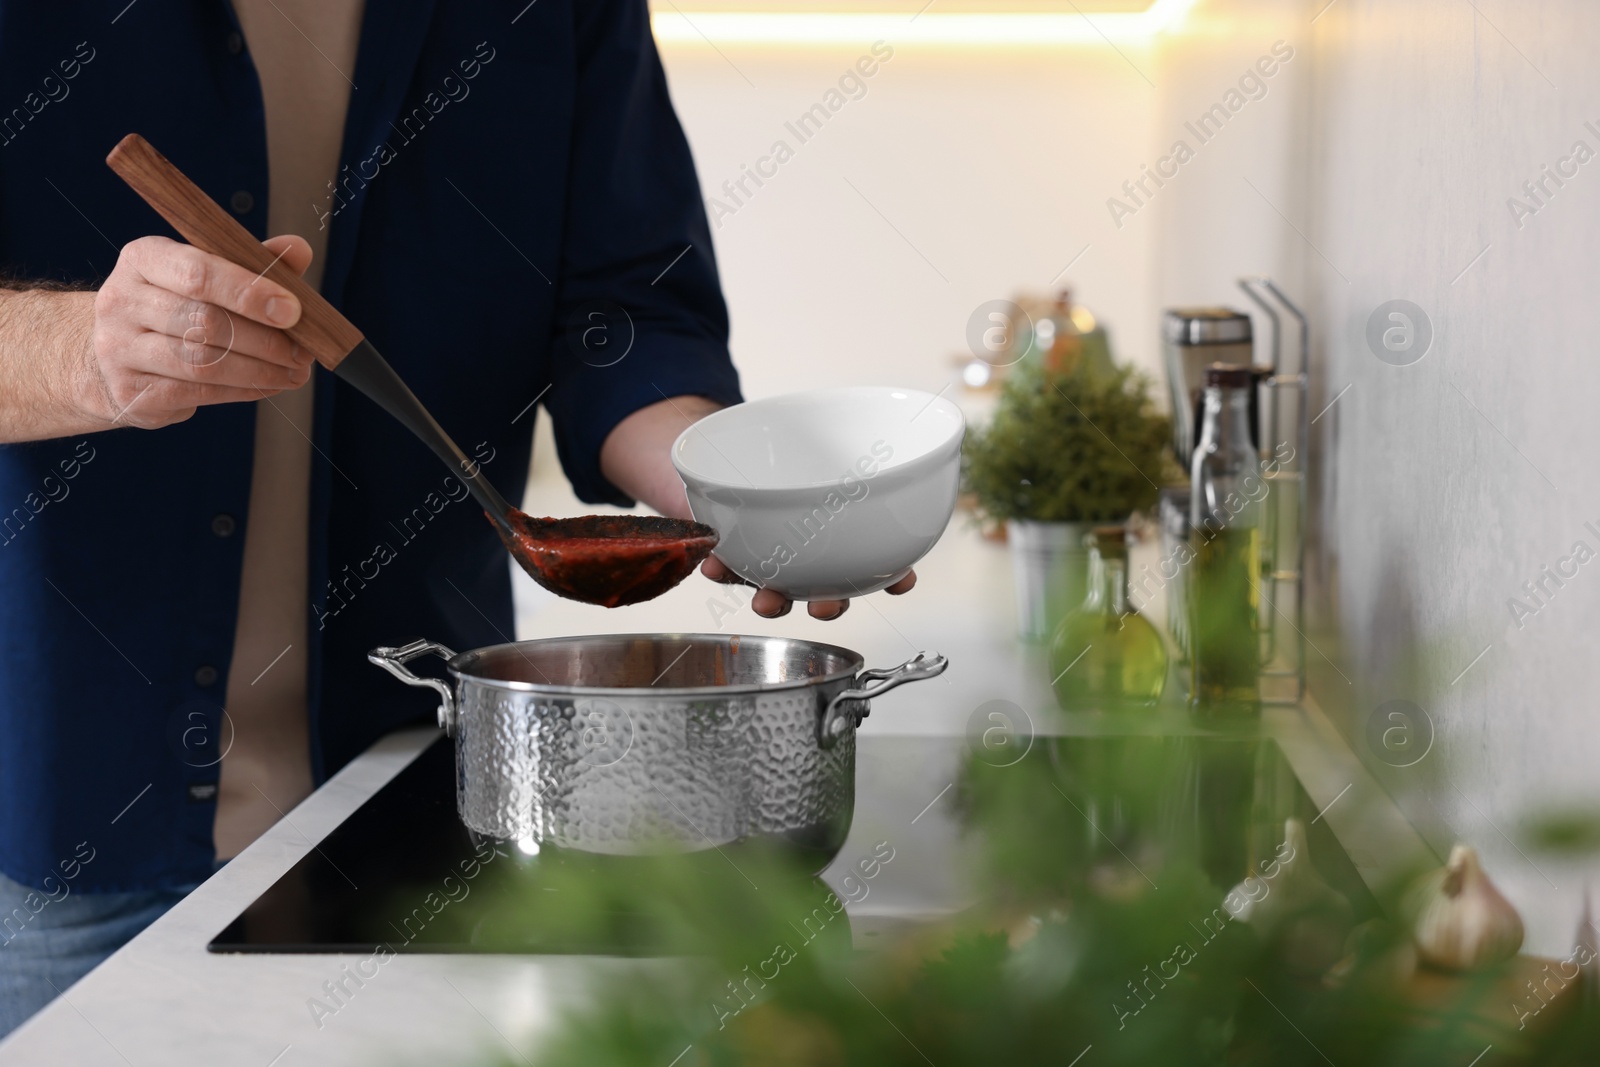 Photo of Man pouring delicious tomato soup into bowl in kitchen, closeup